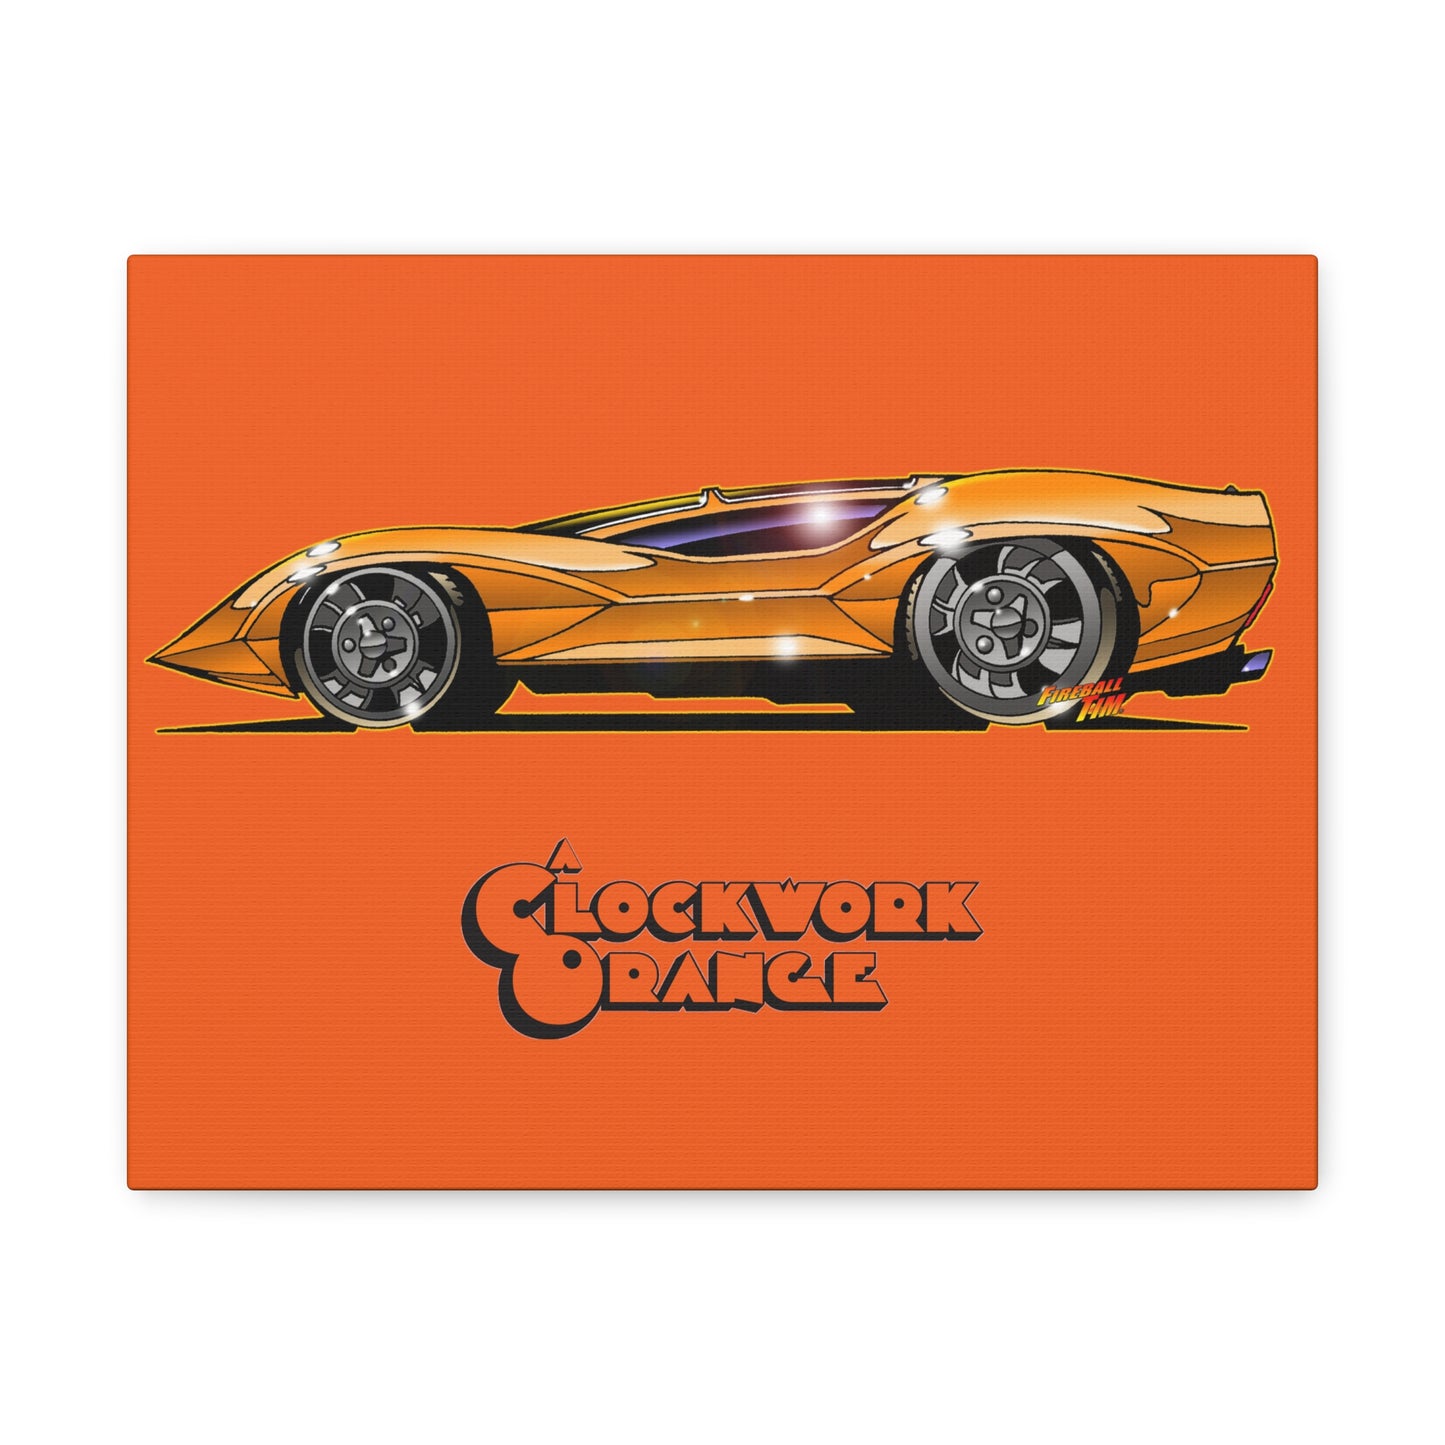 A CLOCKWORK ORANGE Movie Car Art Canvas Gallery Art Print 11x14